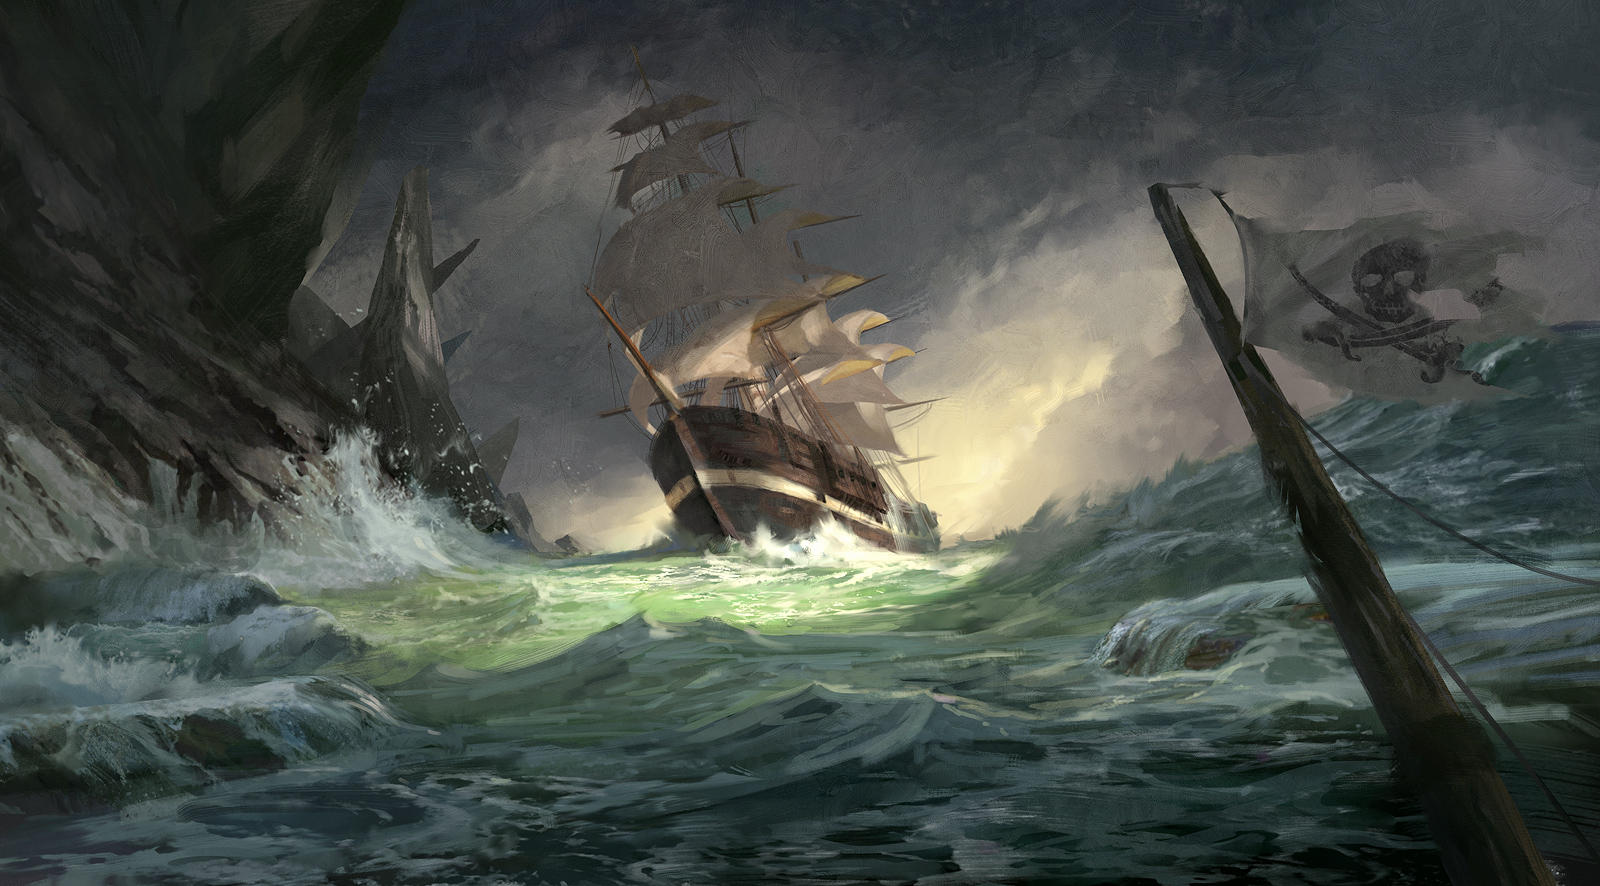 Ship in a Storm by stayinwonderland on DeviantArt